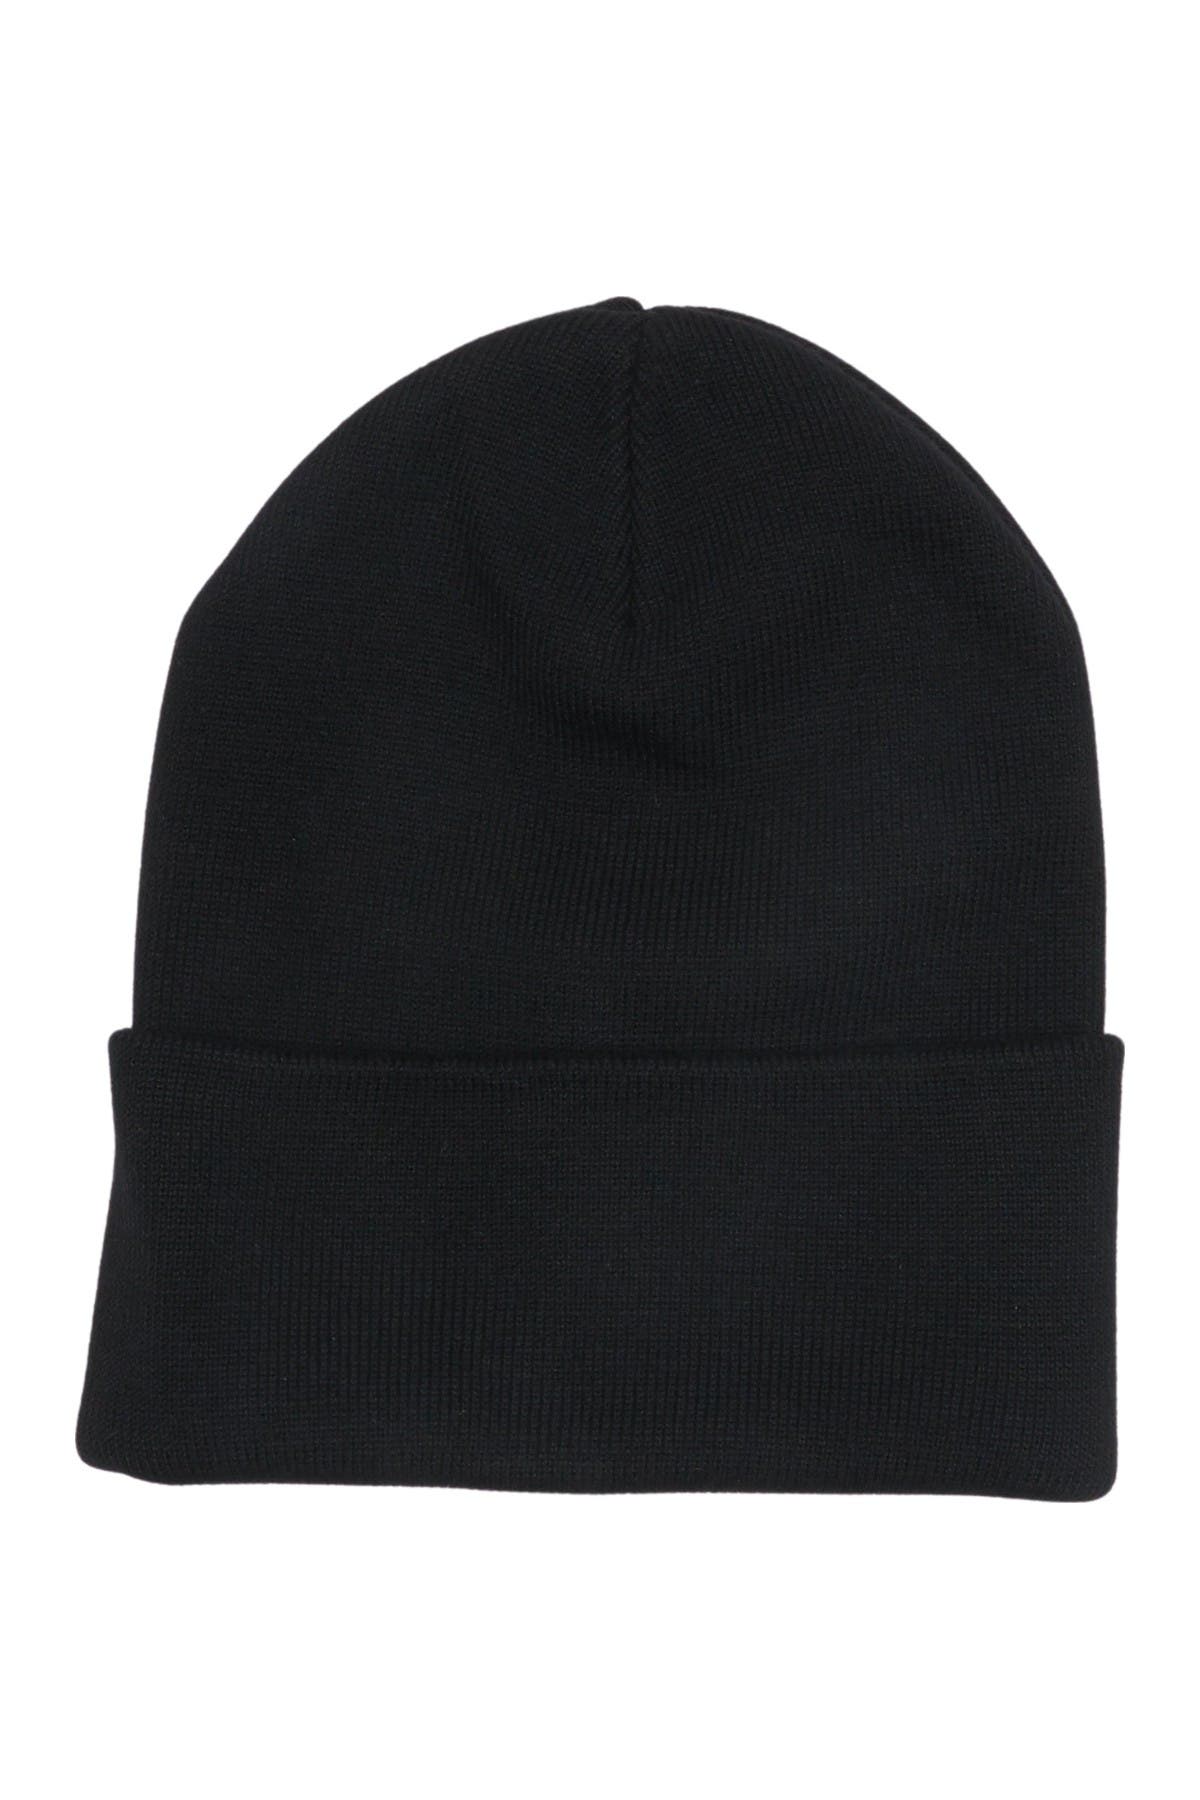 ugg black beanie hat